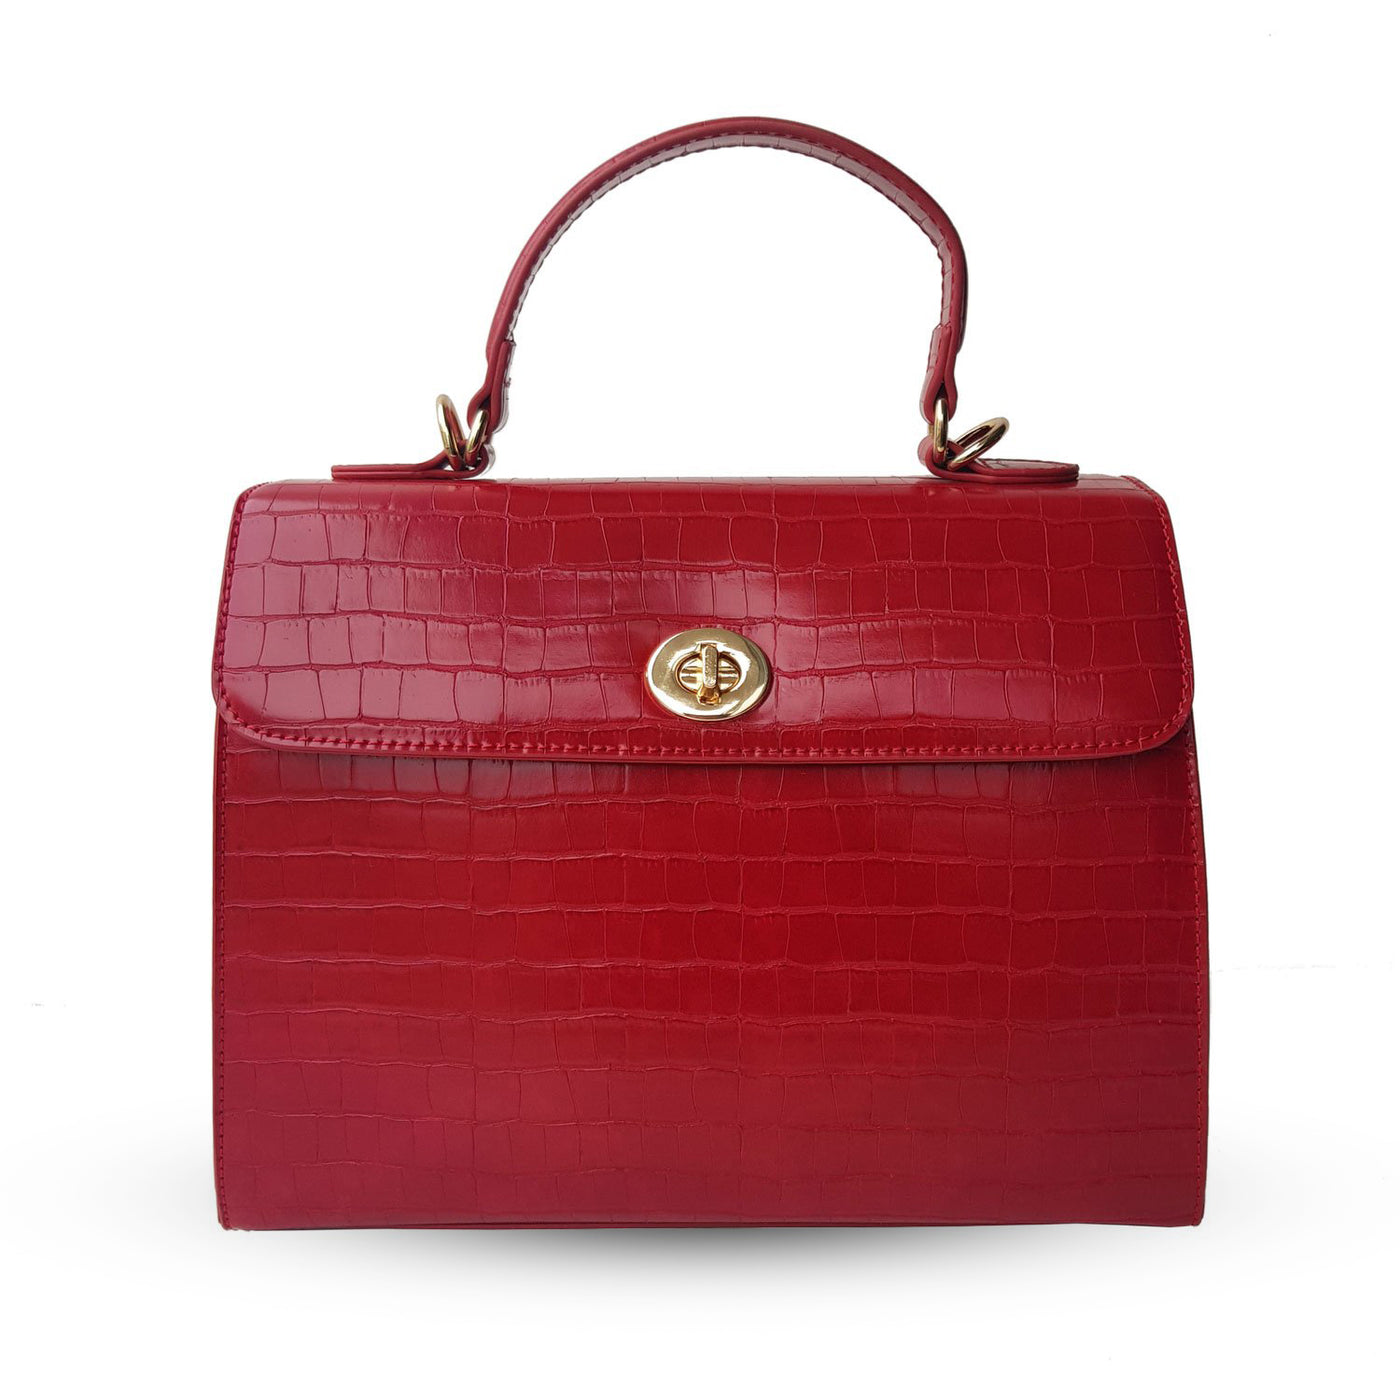 Charlie Stone Vintage Inspired Handbag Retro 1940’s 1950’s Style Rouge Red Croc Vegan leather